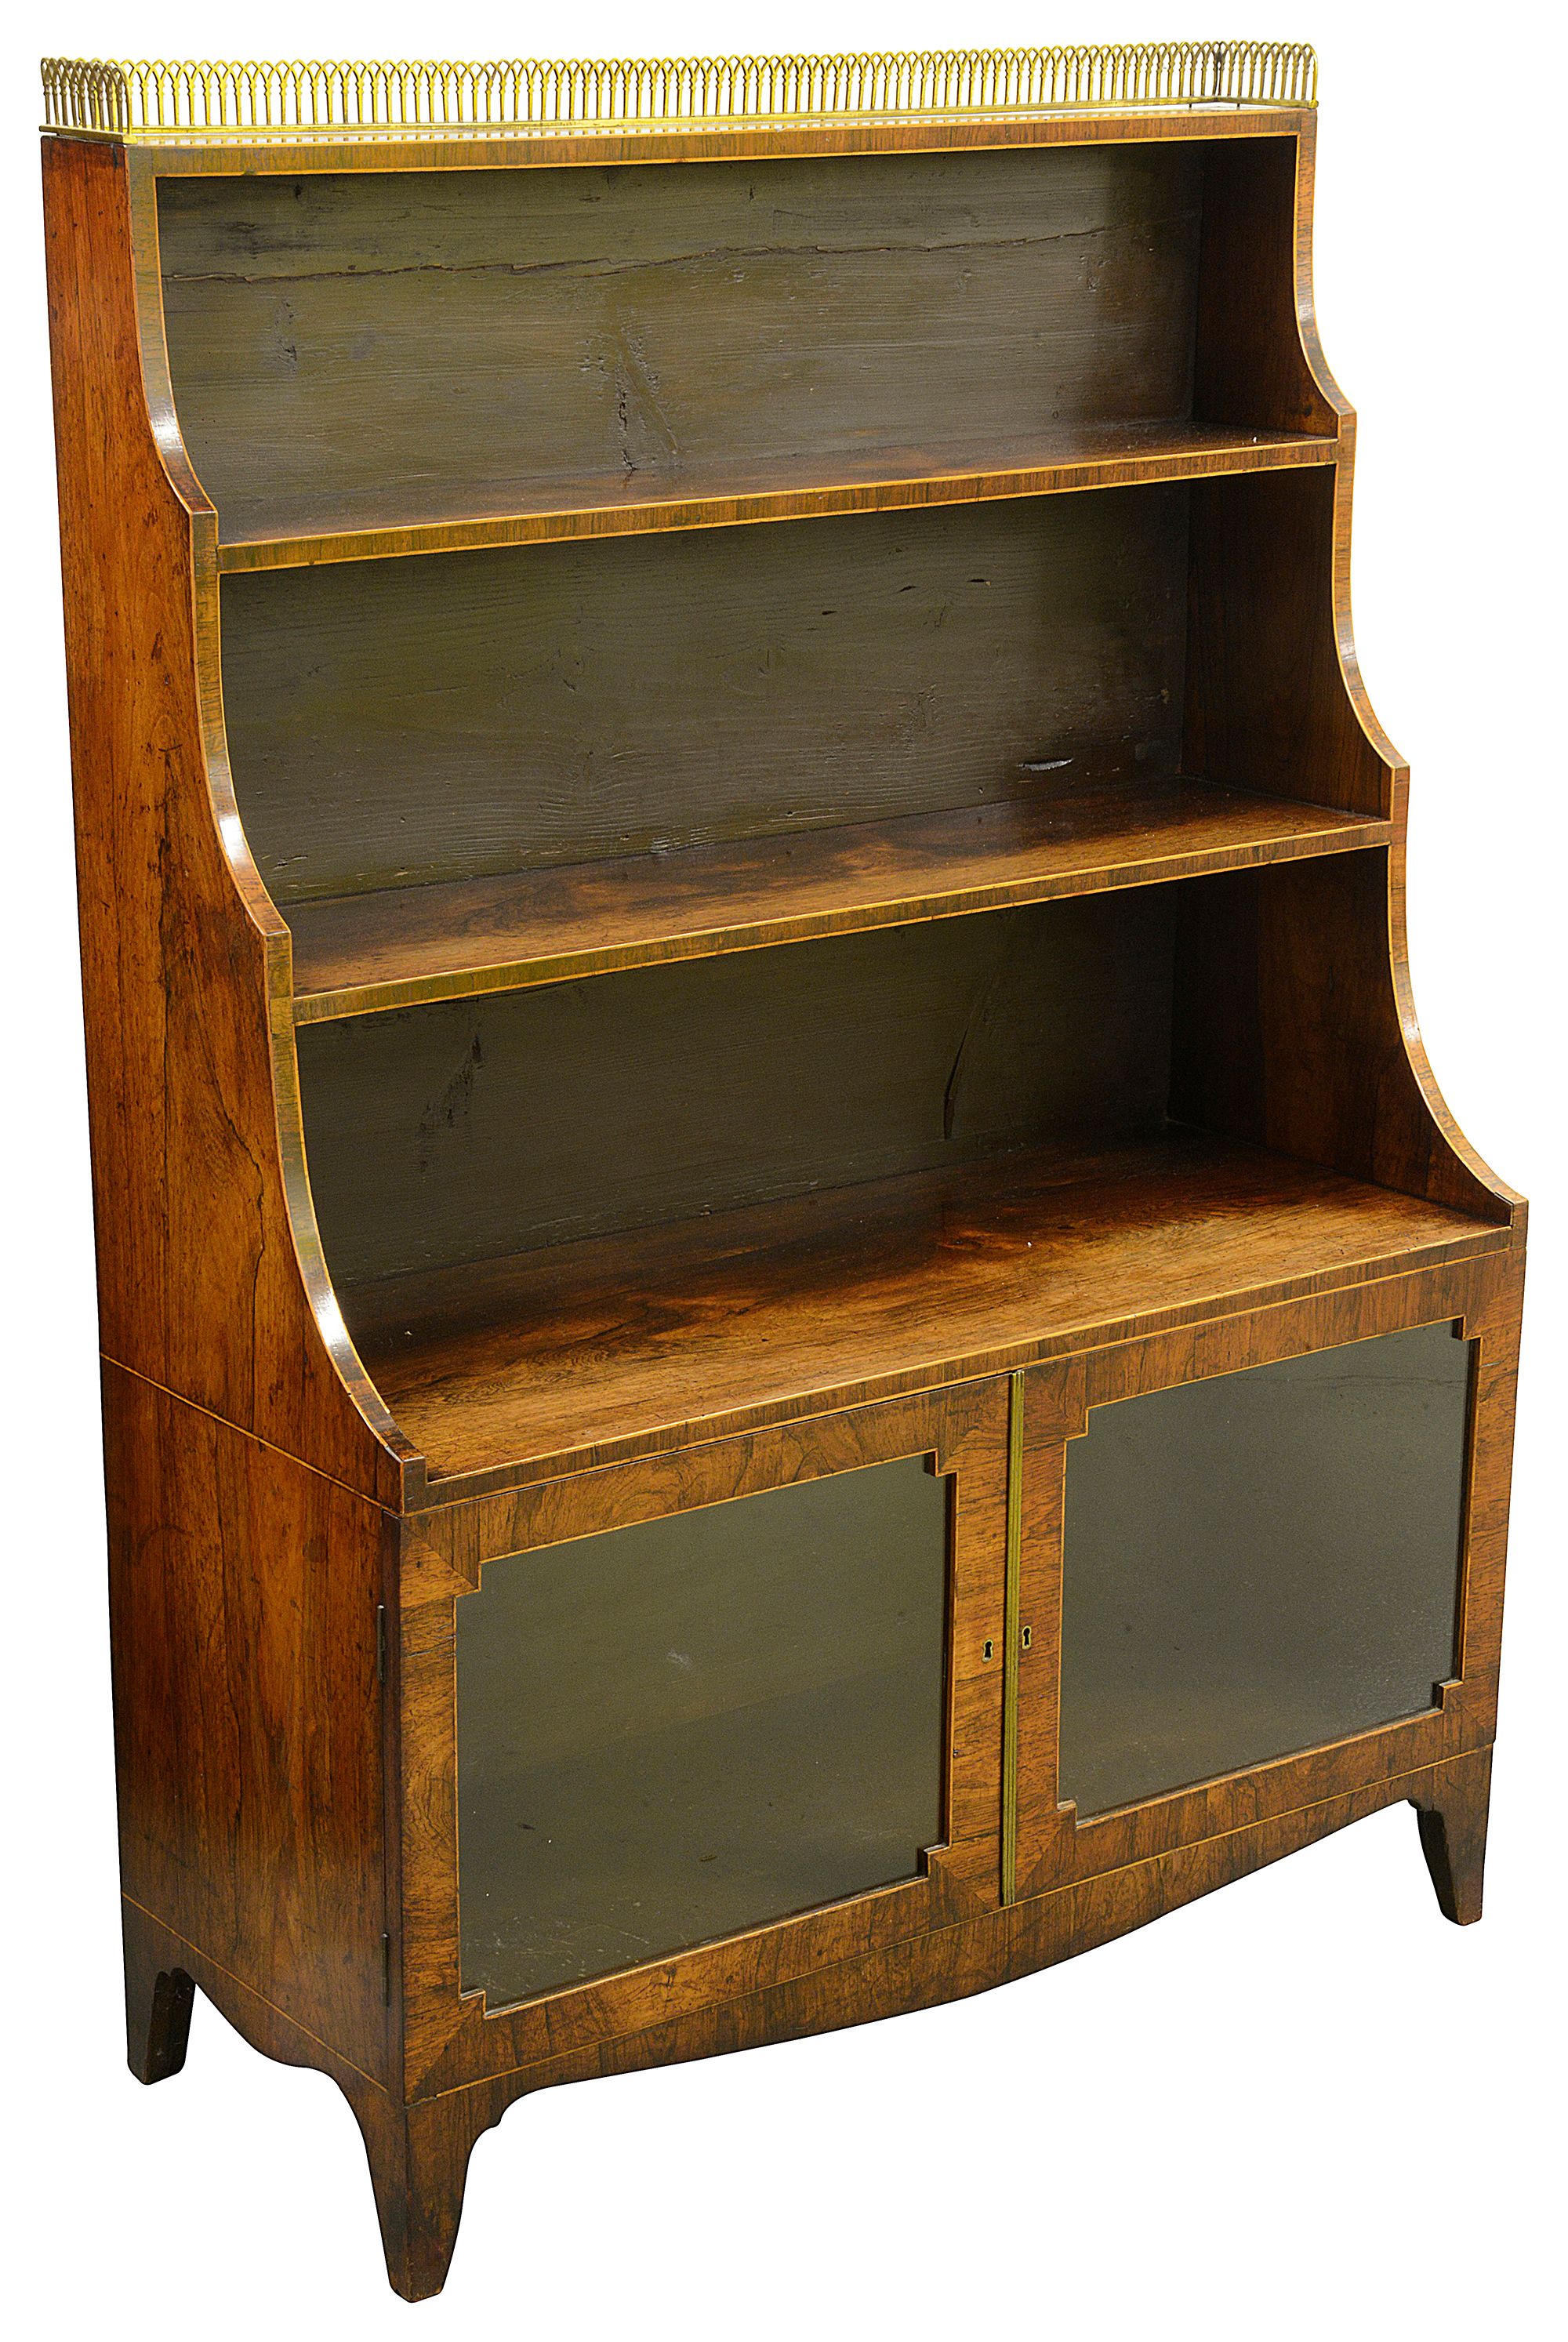 George III rosewood bookcase - Image 2 of 2